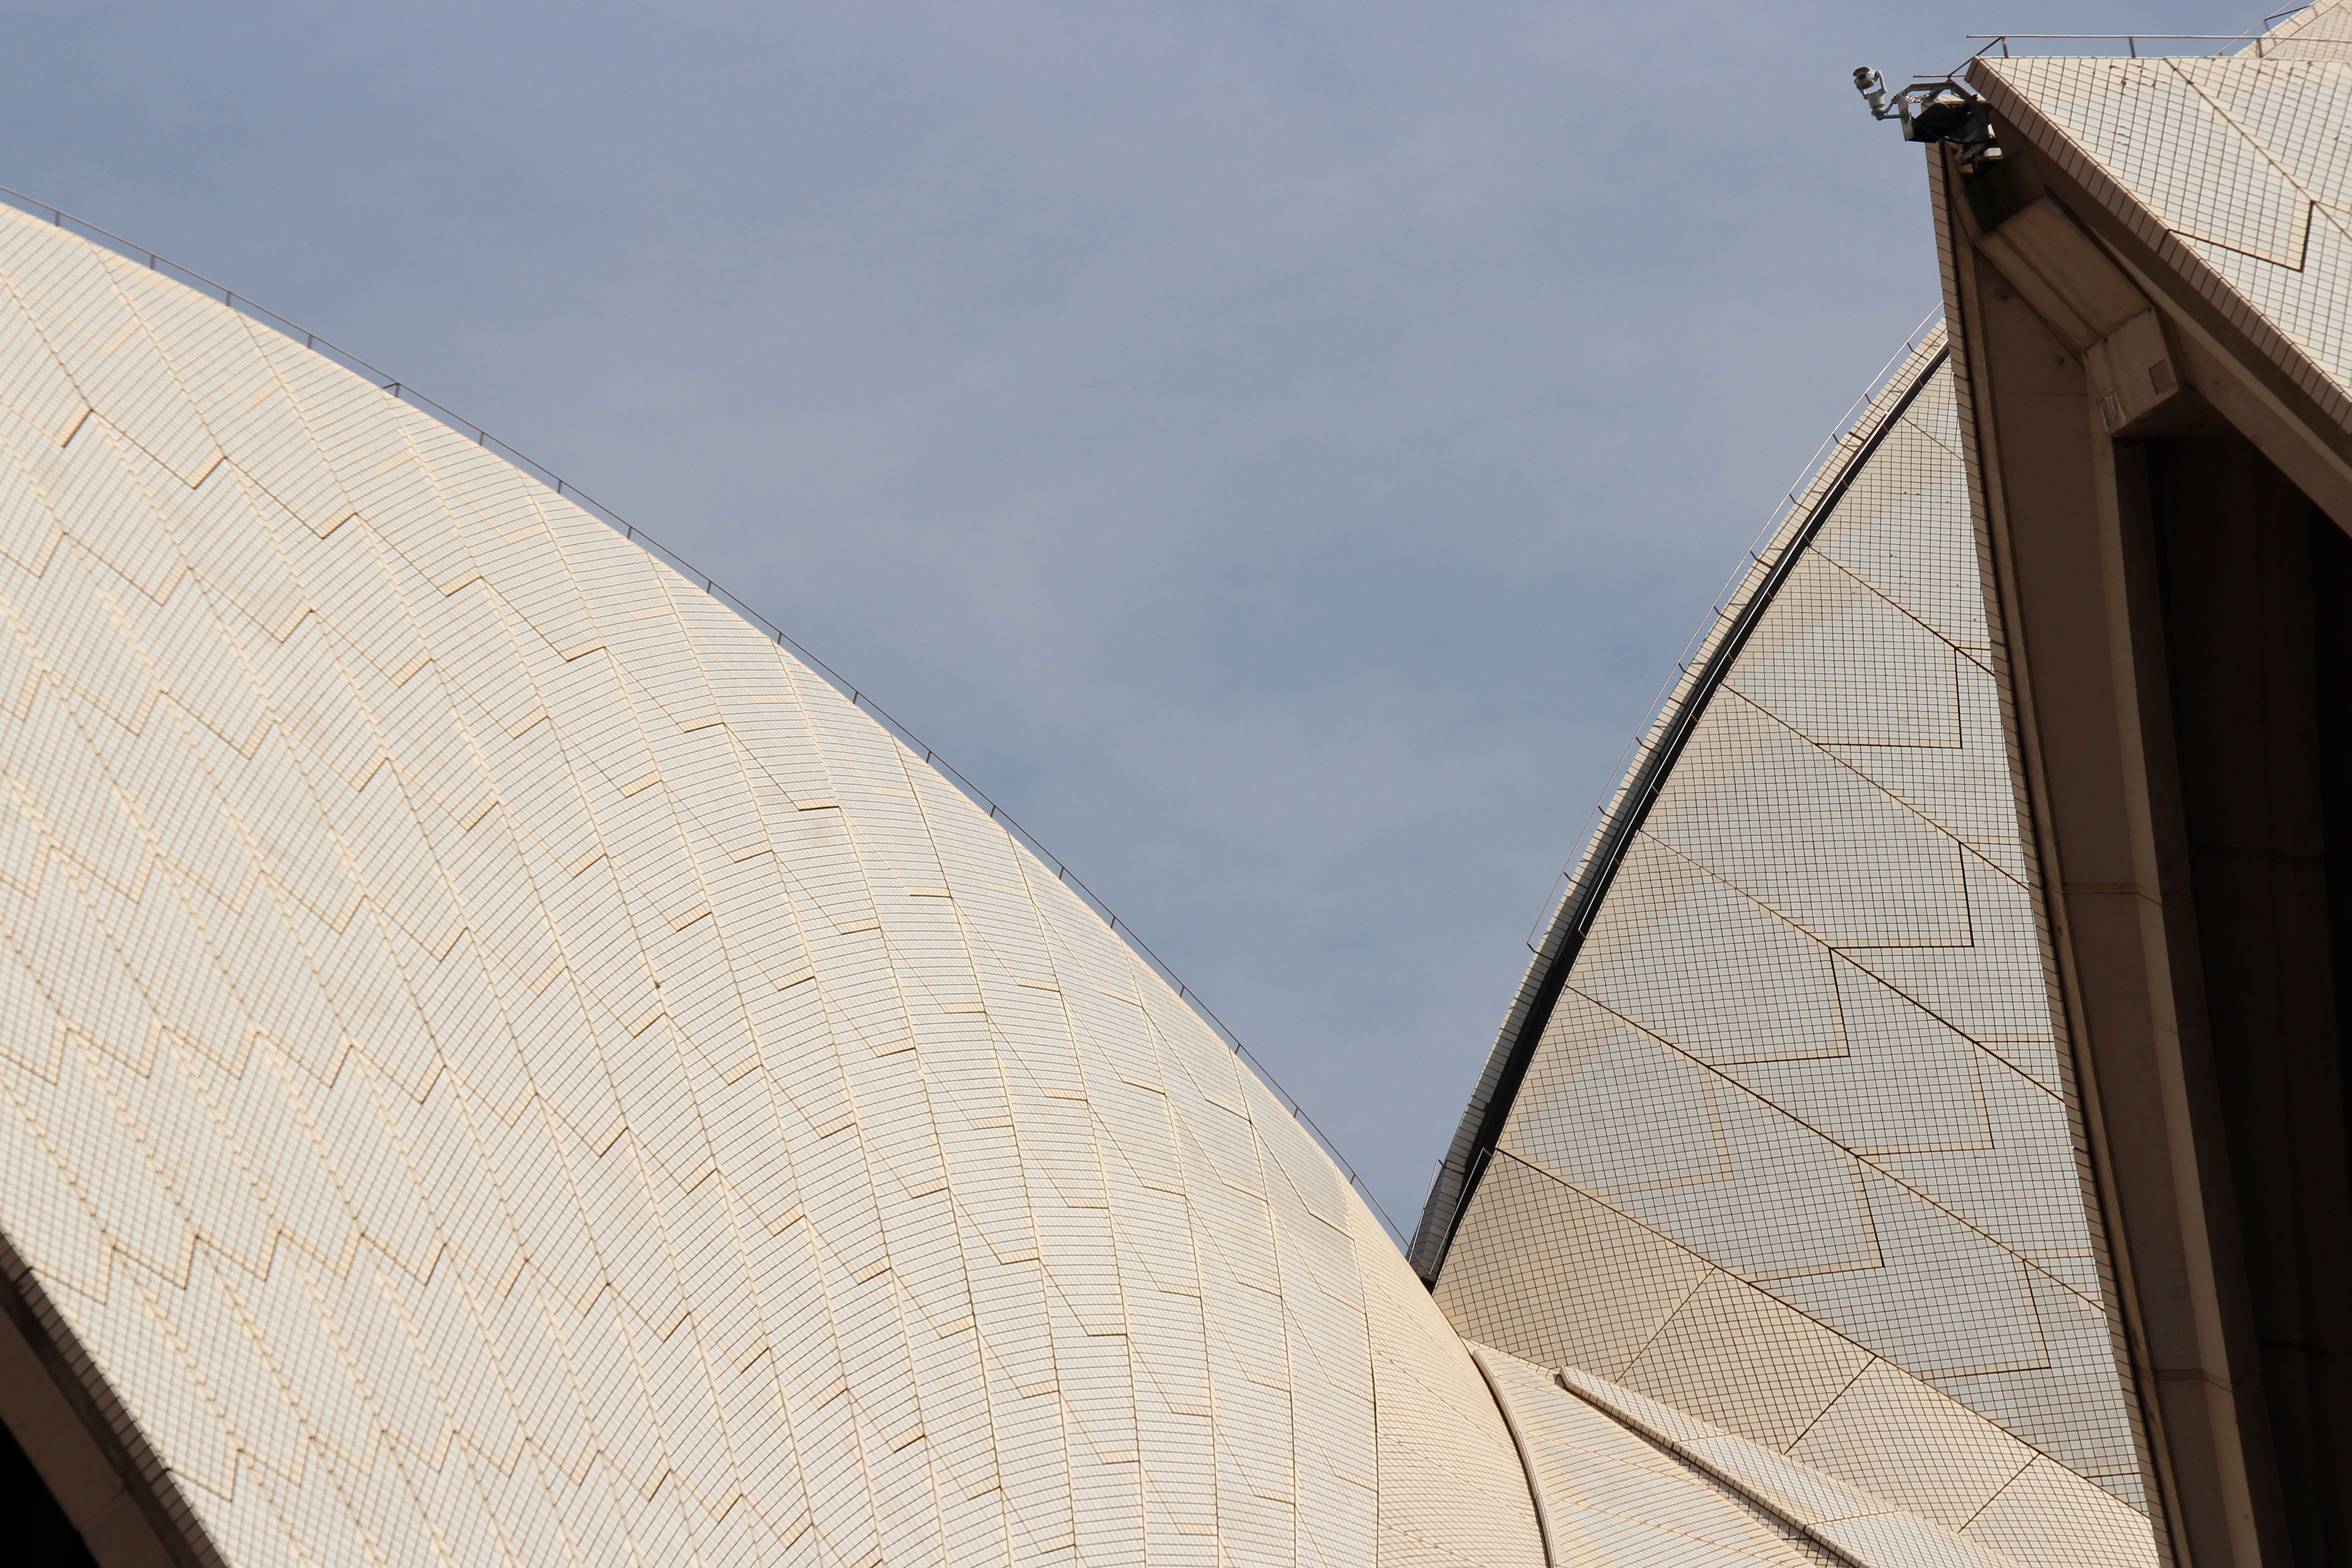 Close up image of the Sydney Opera House